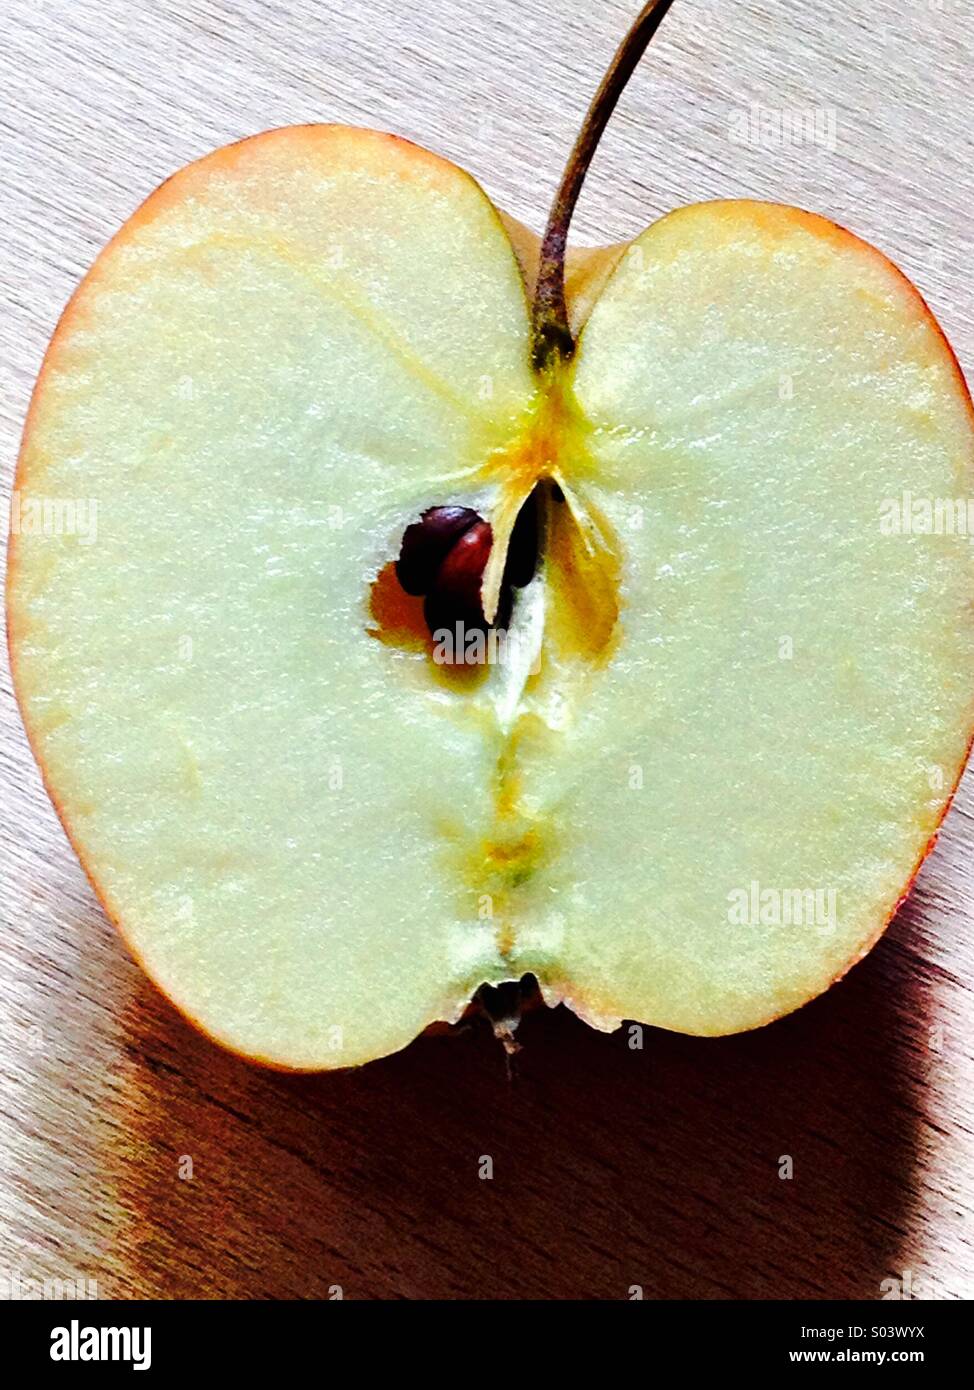 Apple cut in half Stock Photo